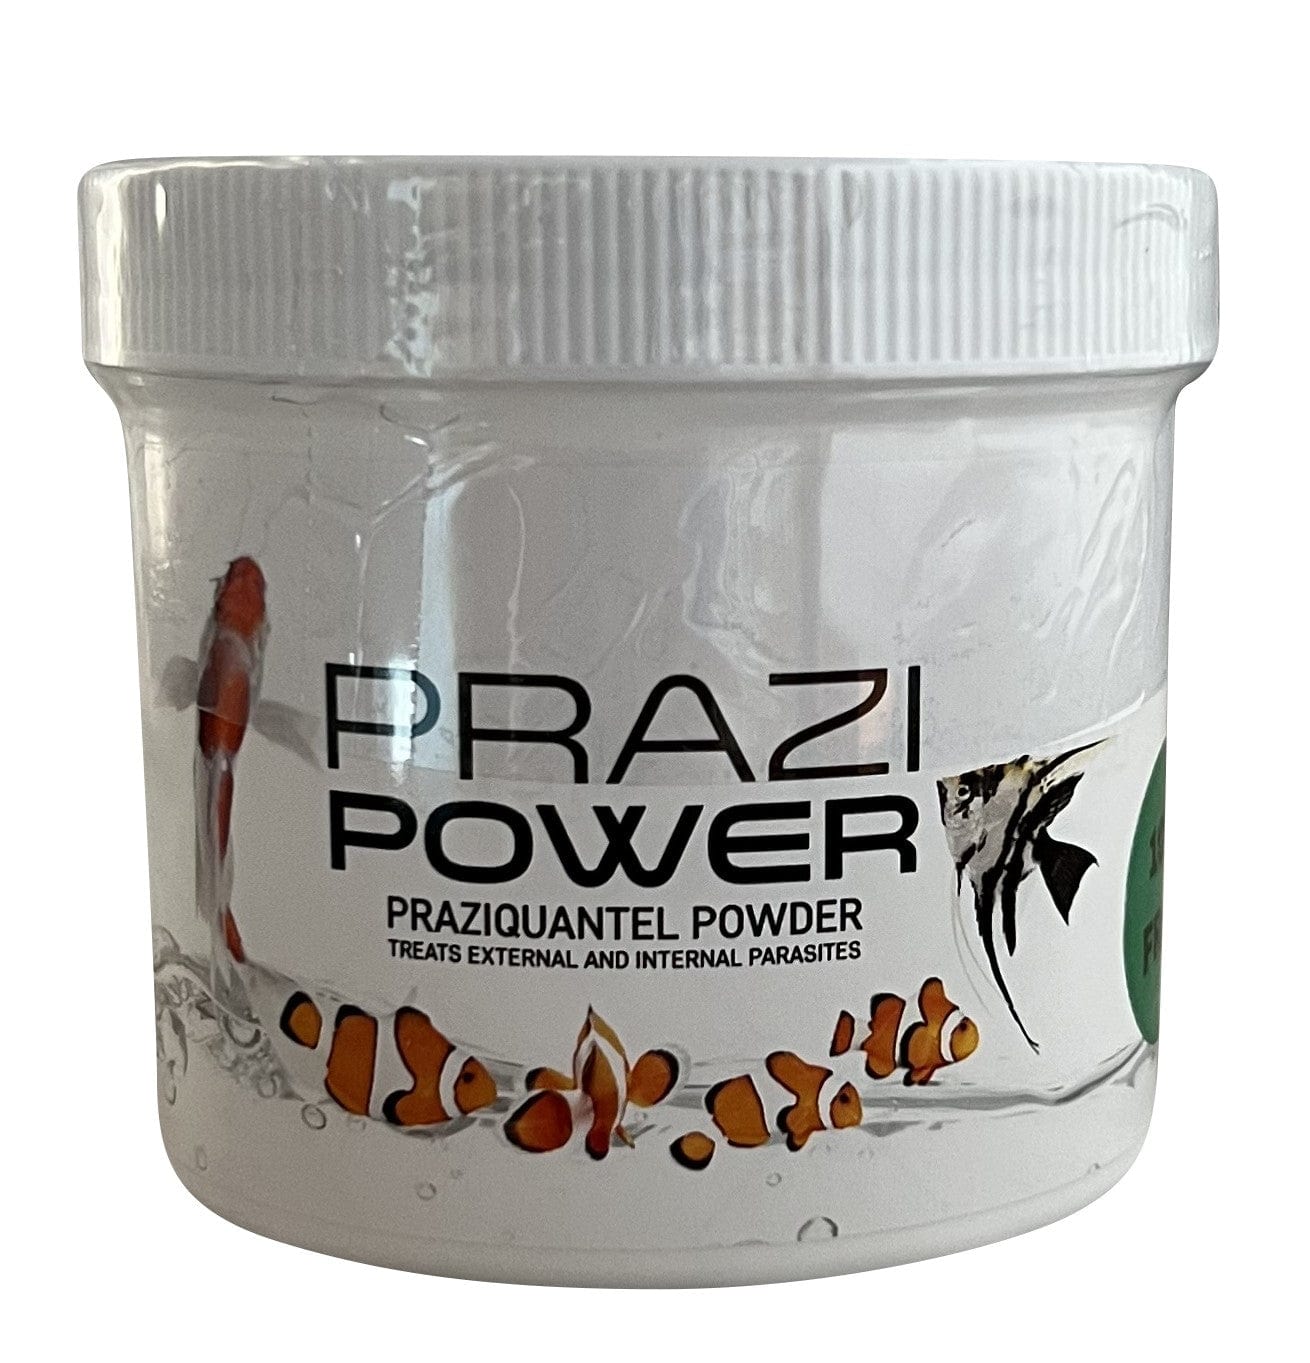 Smith Creek Lake & Pond fish medication Prazi-Power Praziquantel Powder Prazi-Power Praziquantel Powder for Fish | Fluke Treatment